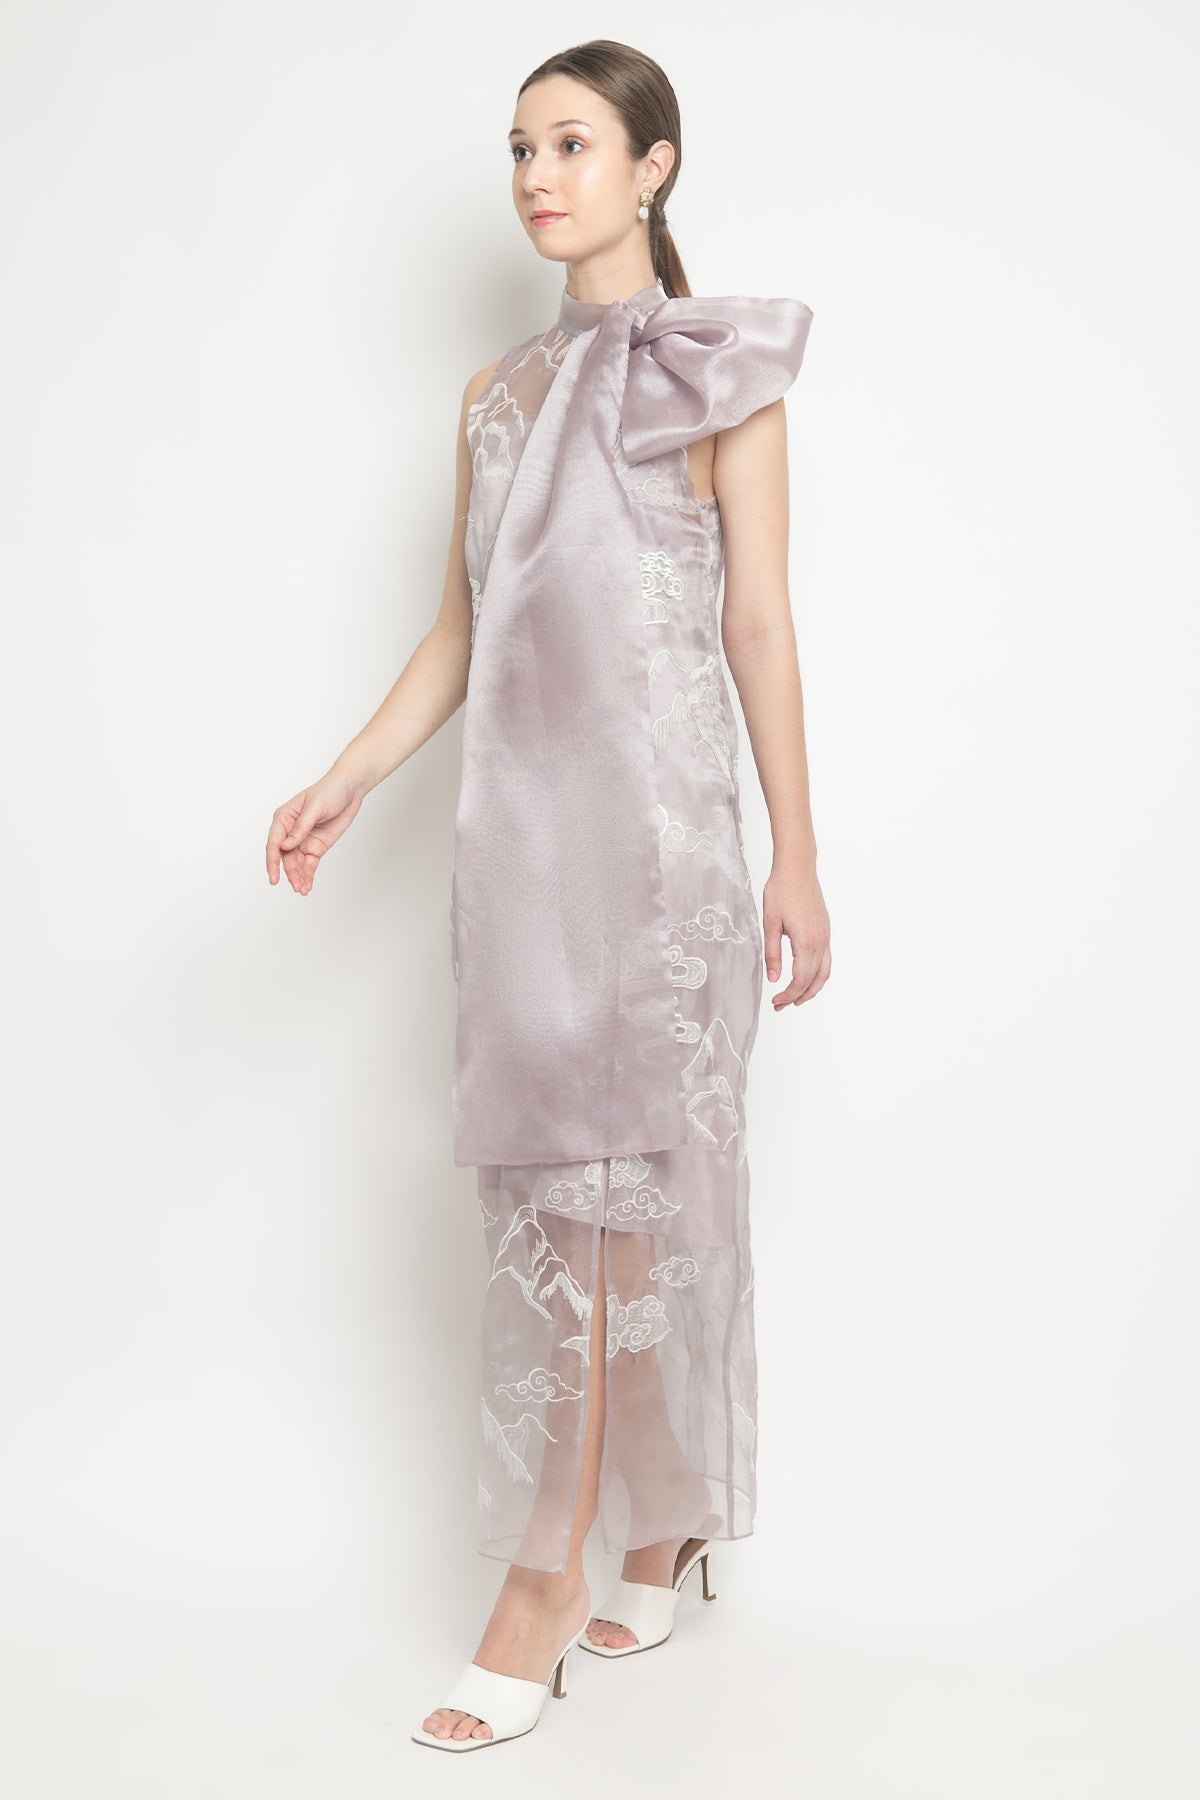 Sinergi Dress Set 02 in Lilac White